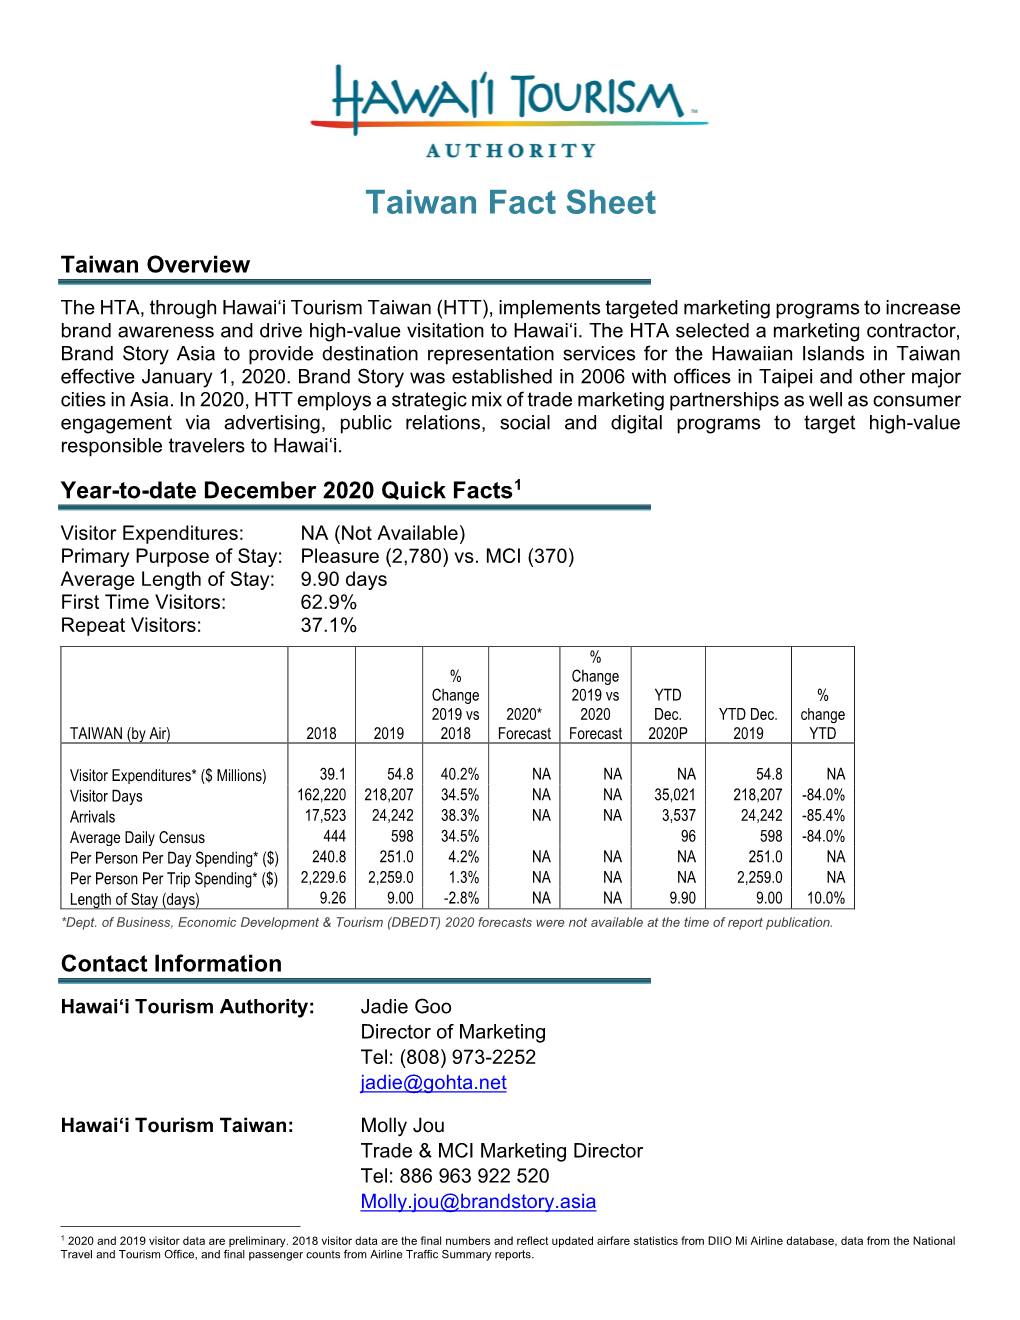 Taiwan Fact Sheet with December 2020 Data